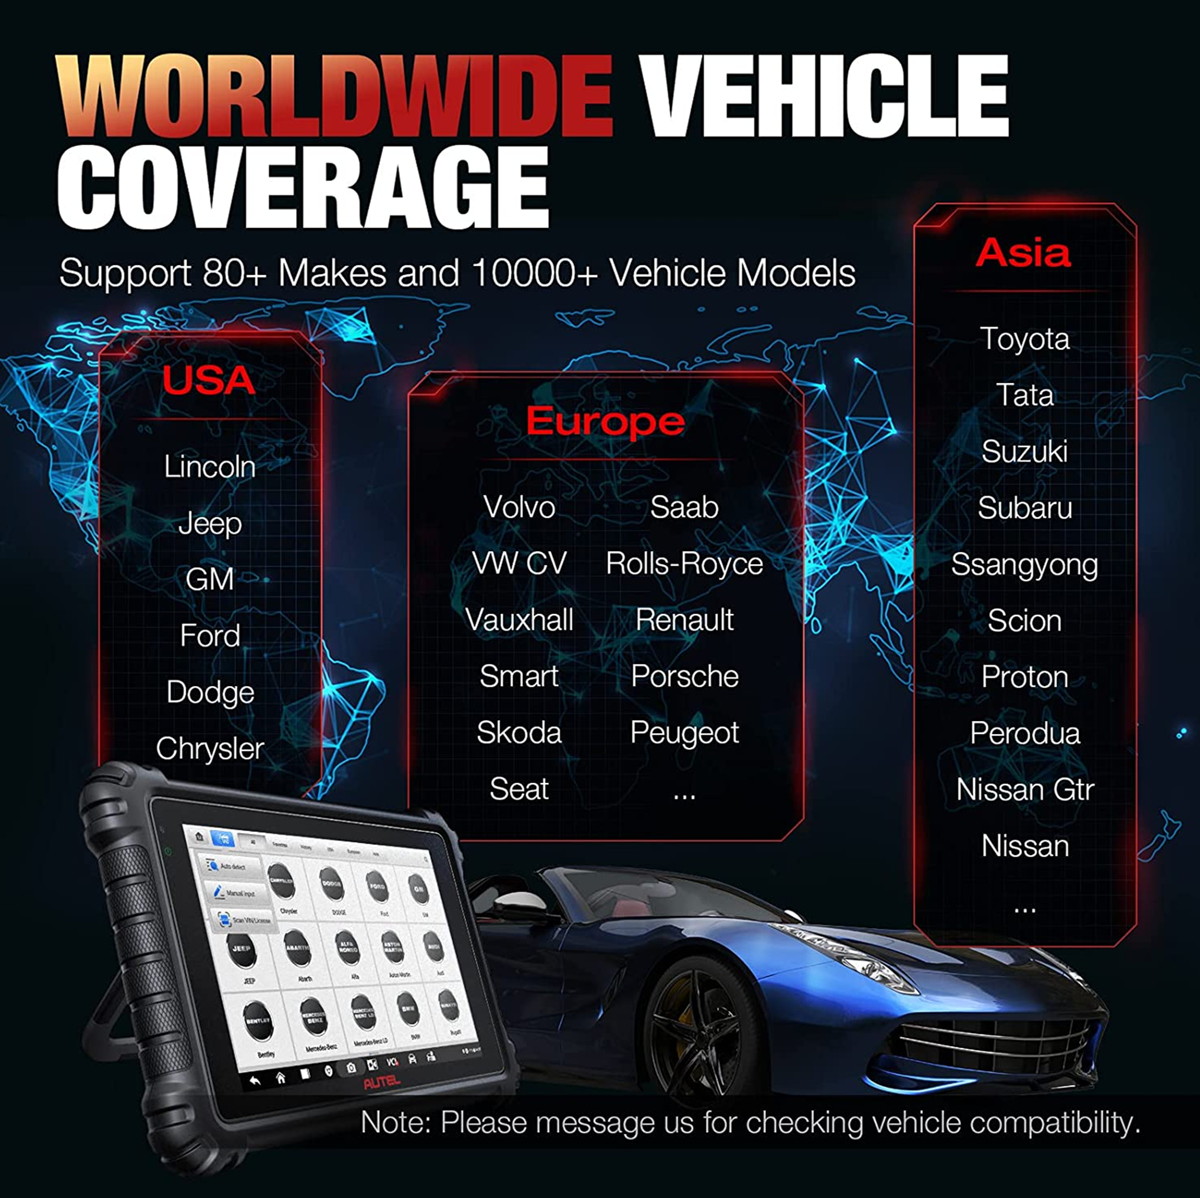 Autel MaxiSYS MS906 Pro Vehicle Coverage